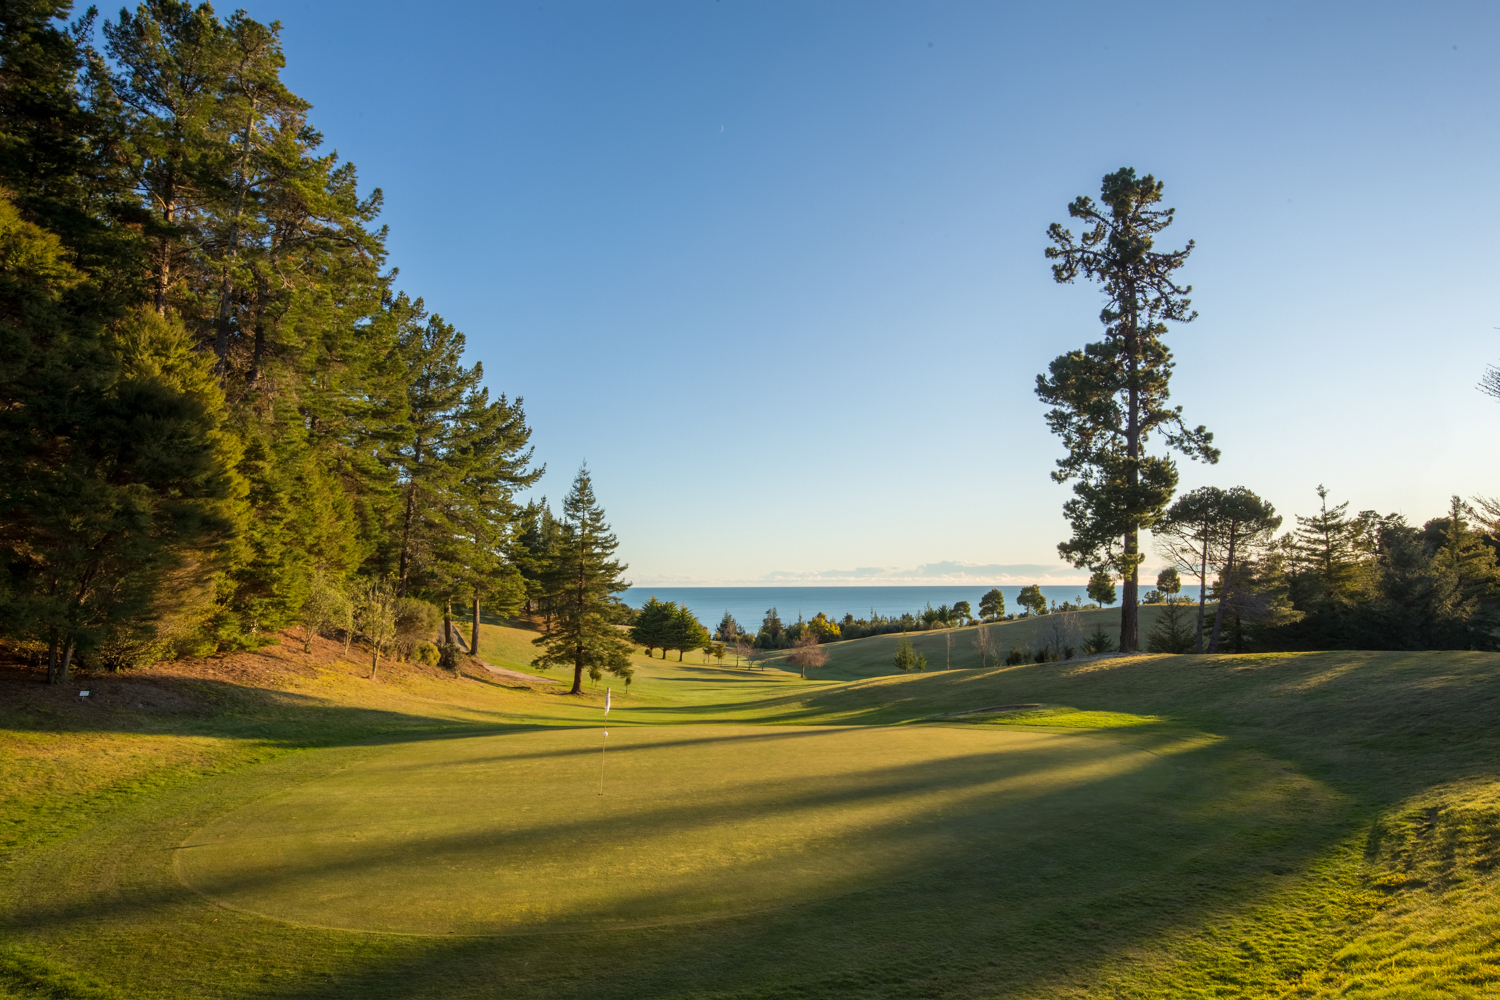 Tasman Golf Course - just a few minutes away